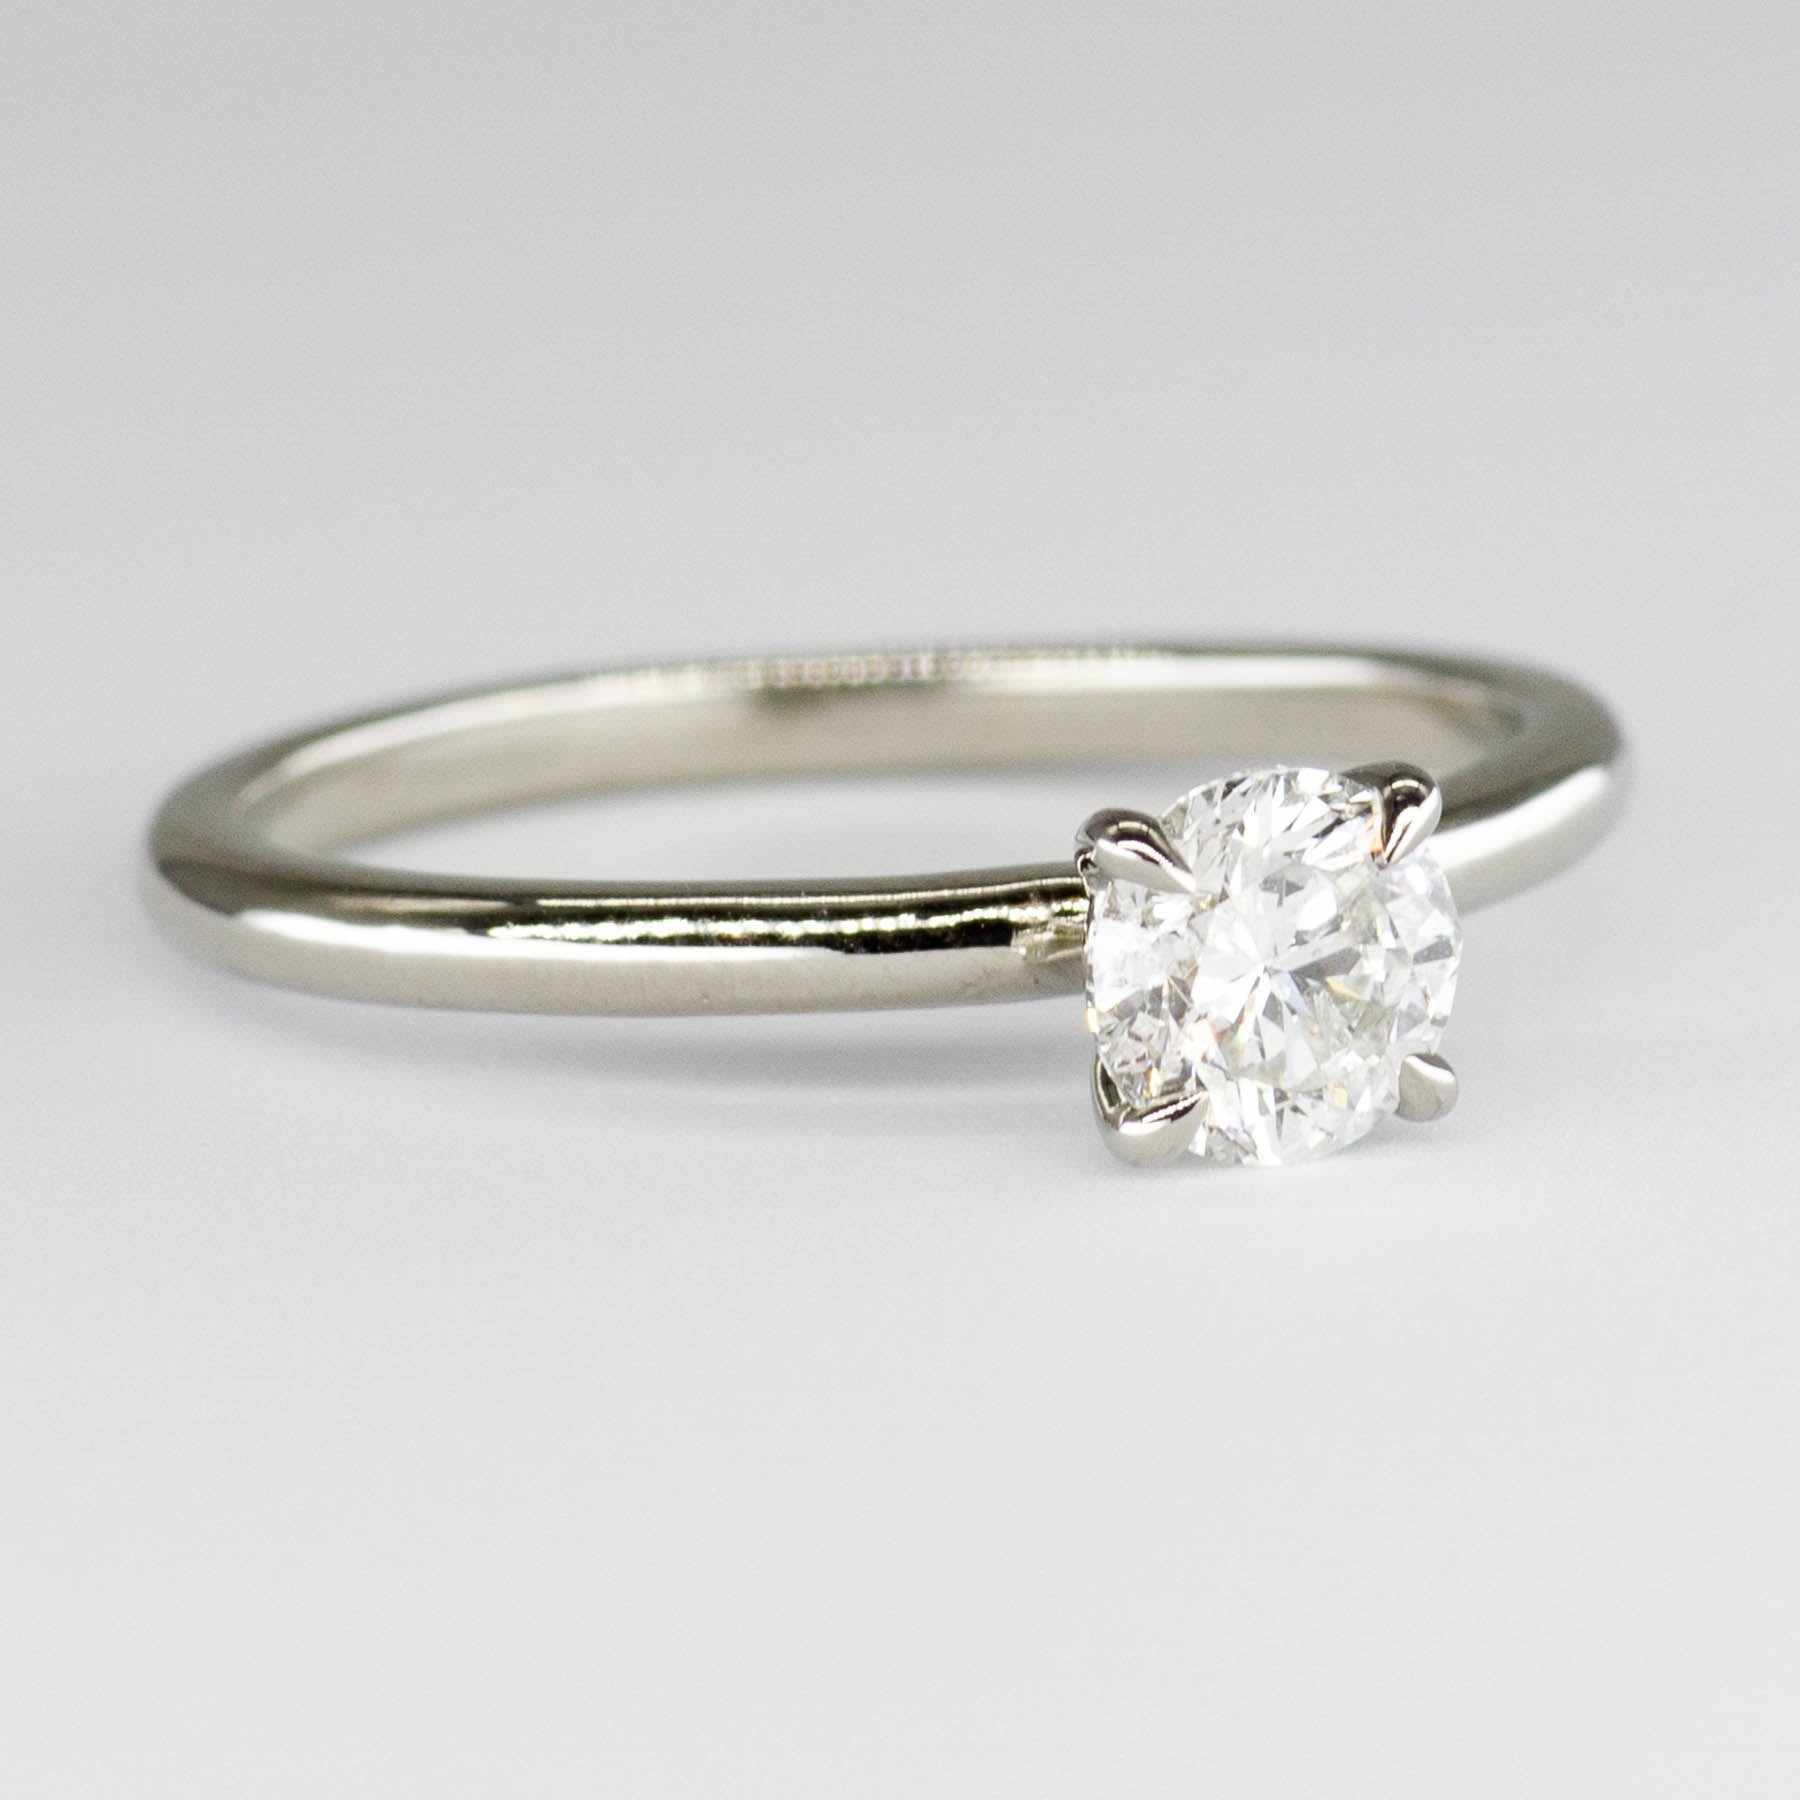 '100 Ways' 14k White Gold Diamond Solitaire Ring | 0.60ct | SZ 7 - 100 Ways